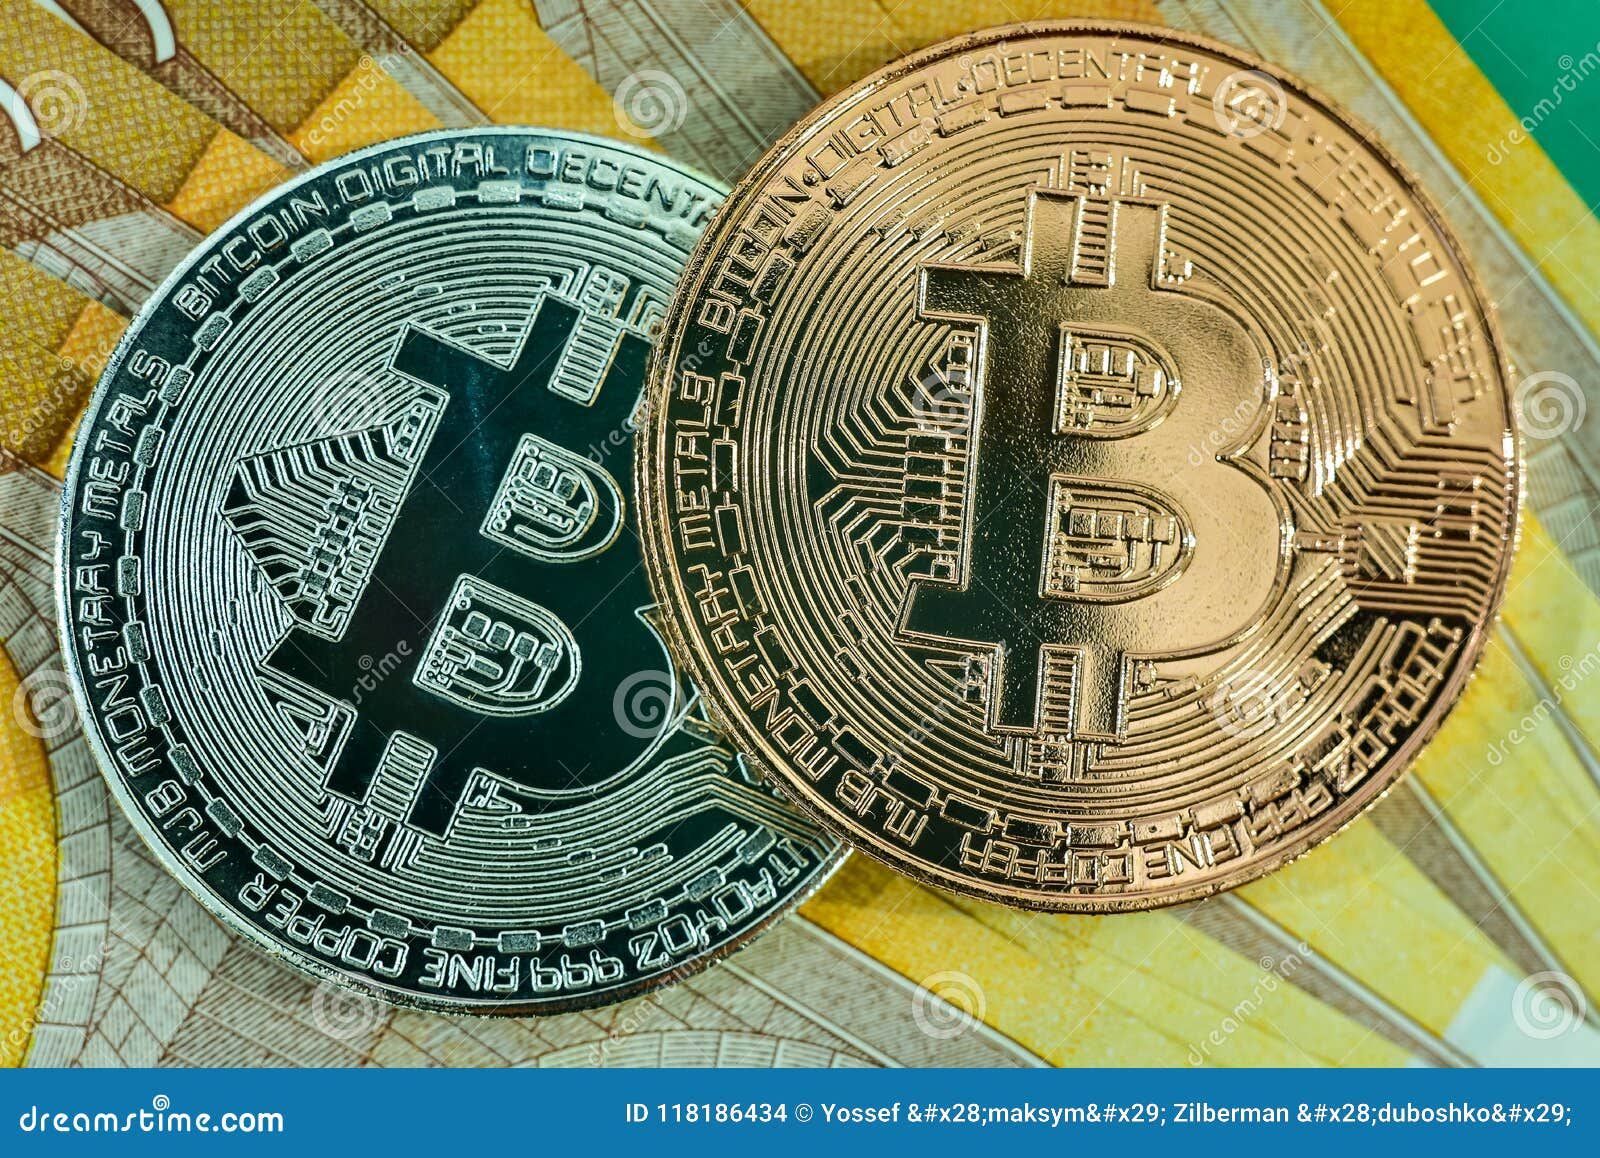 buy bitcoins with euros